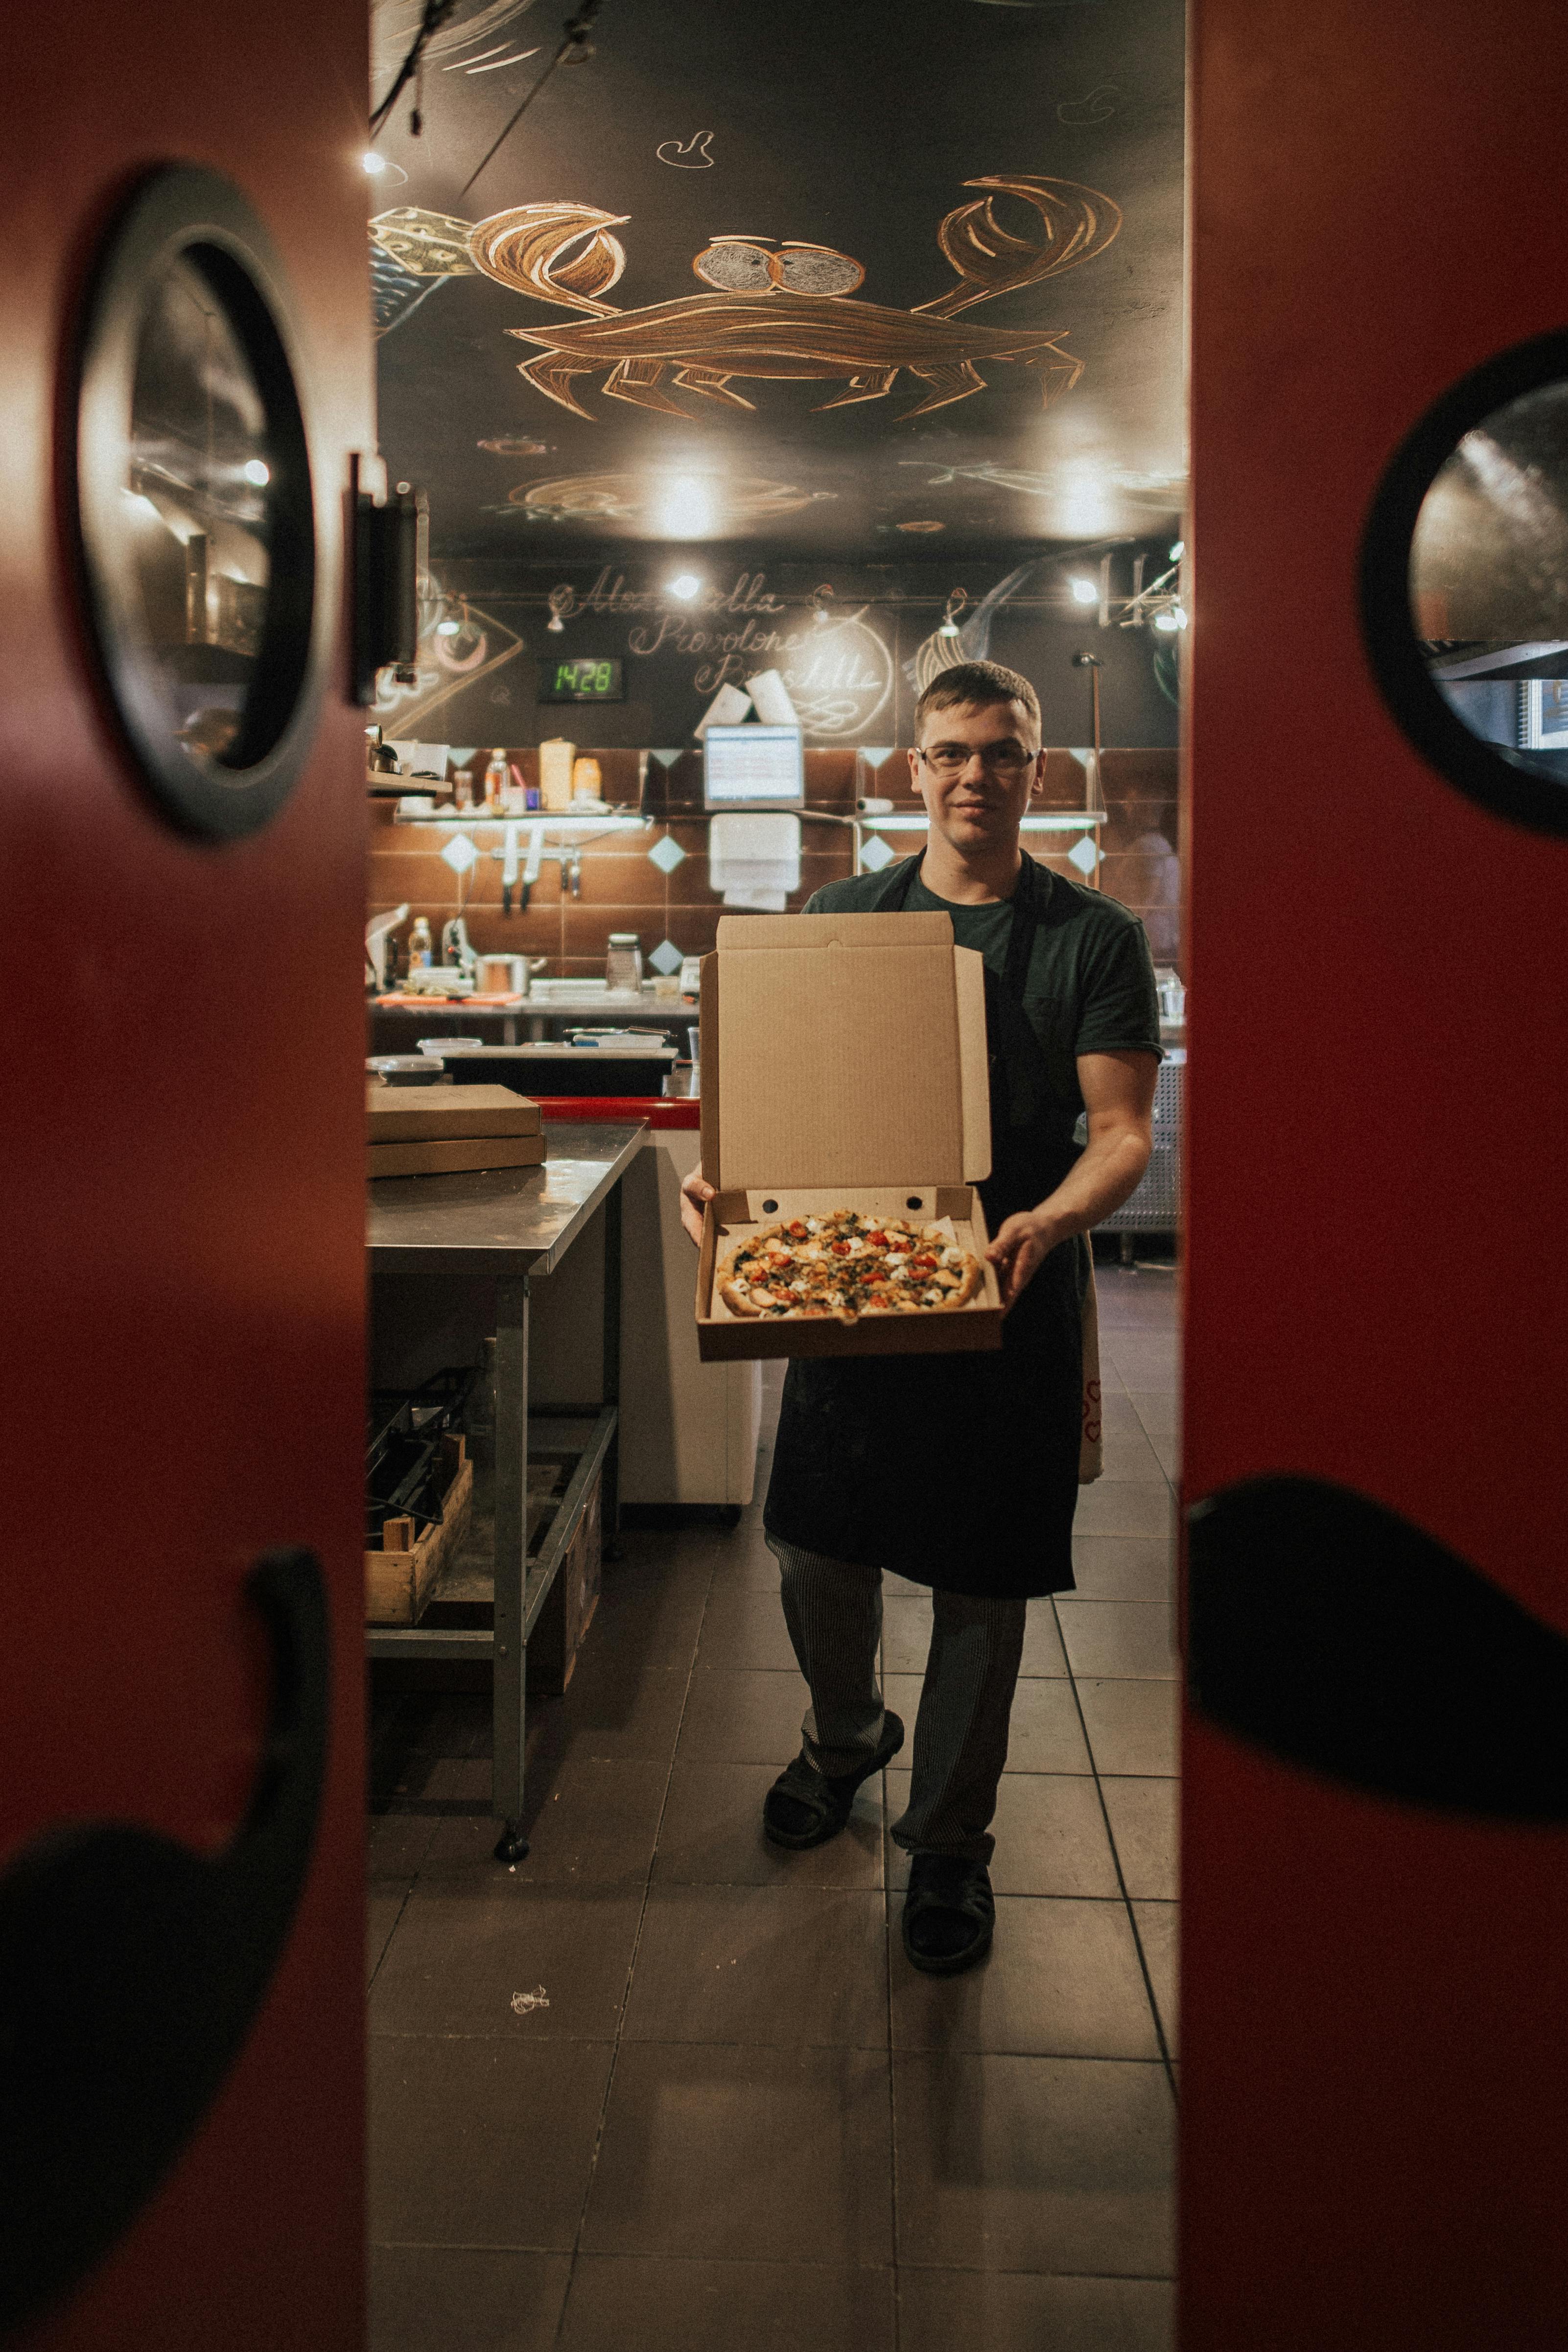 male chef holding a pizza box open Stock Photo